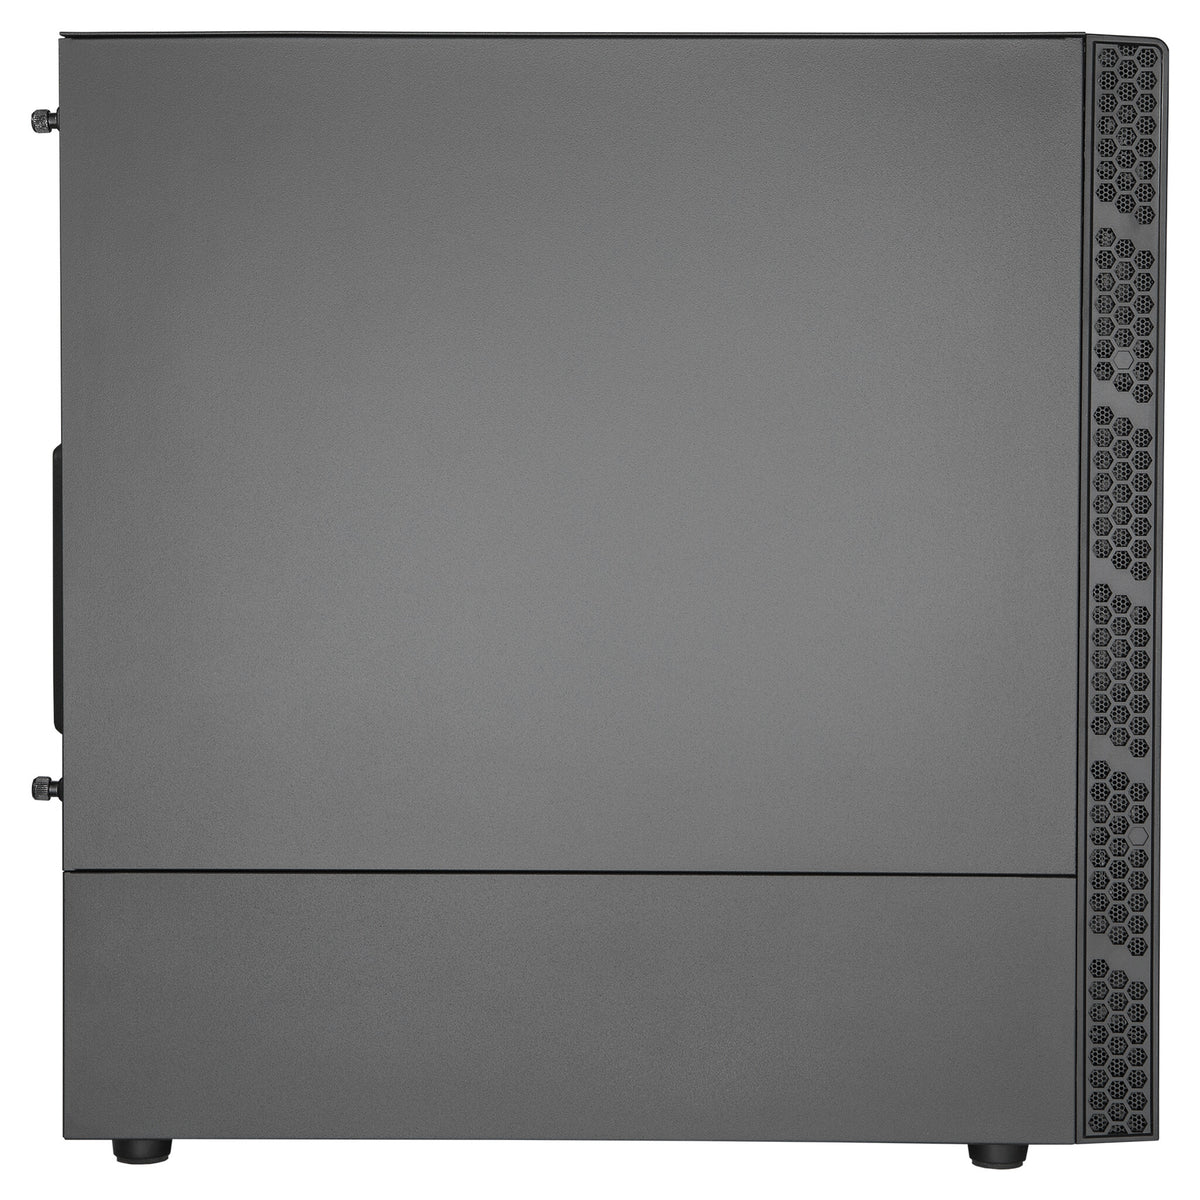 Cooler Master MasterBox MB400L - MicroATX Mini Tower Case in Black (No ODD)